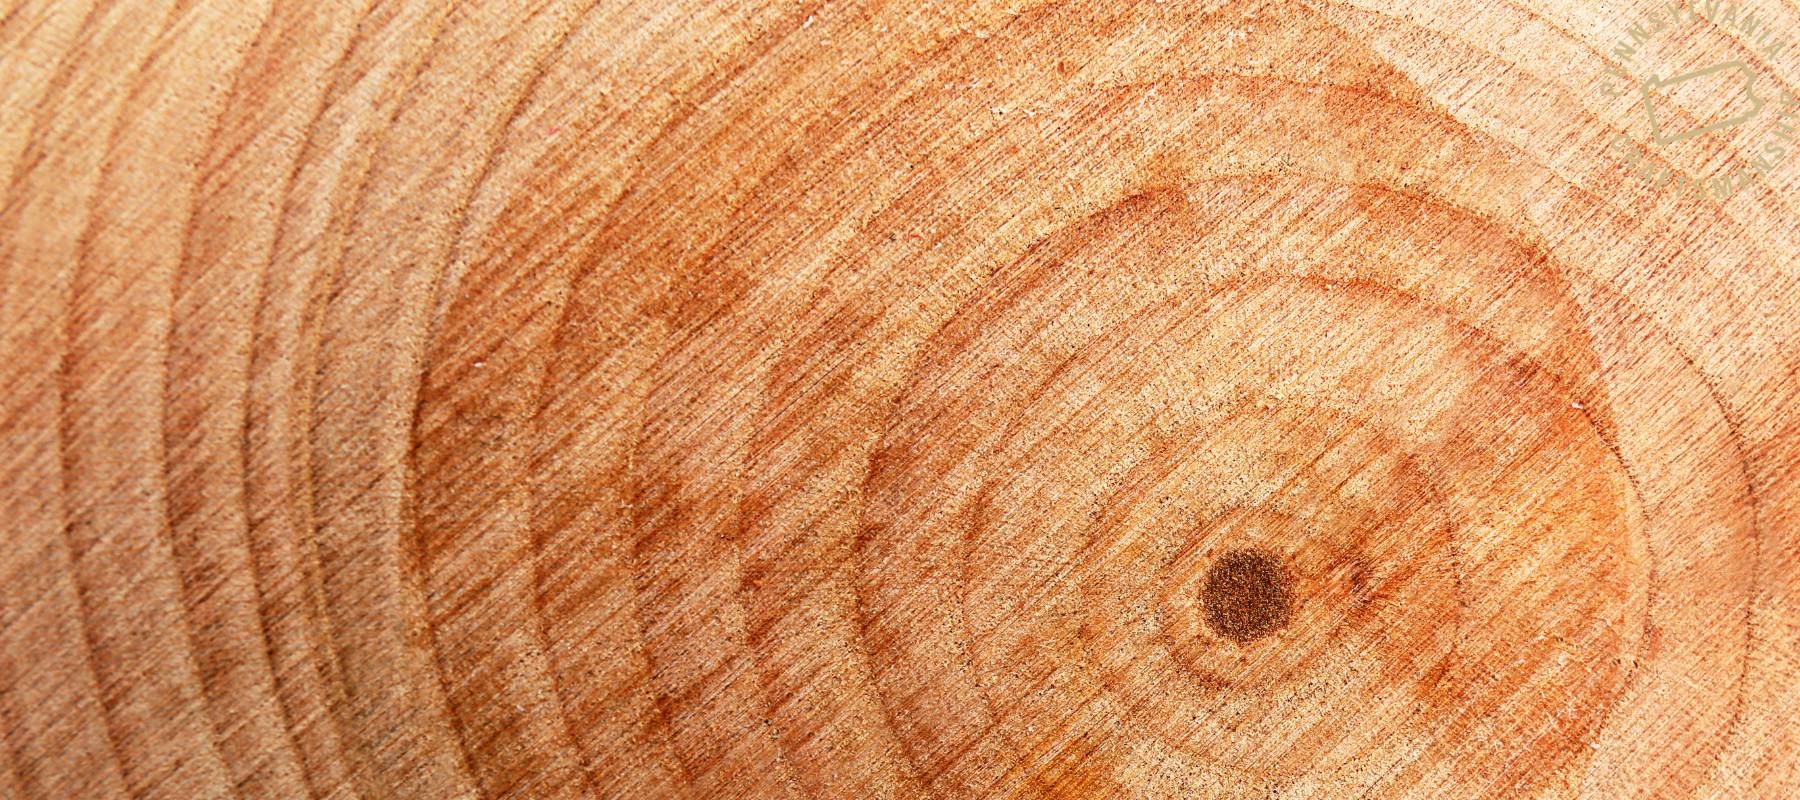 5 Benefits Of Oak Wood - snyders.furniture